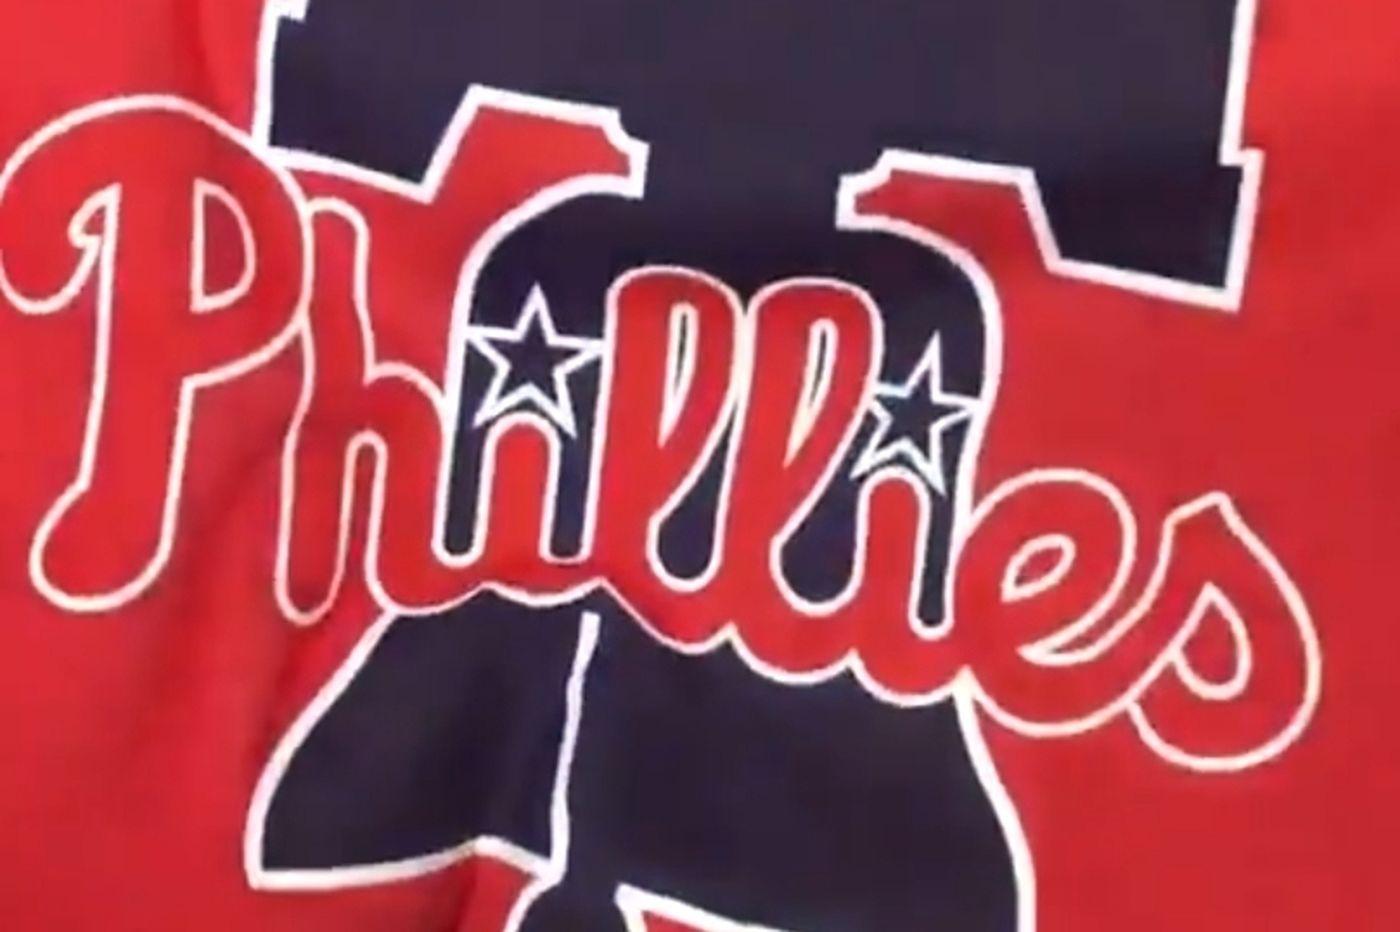 Old School Phillies Logo - Phillies reveal new primary logo